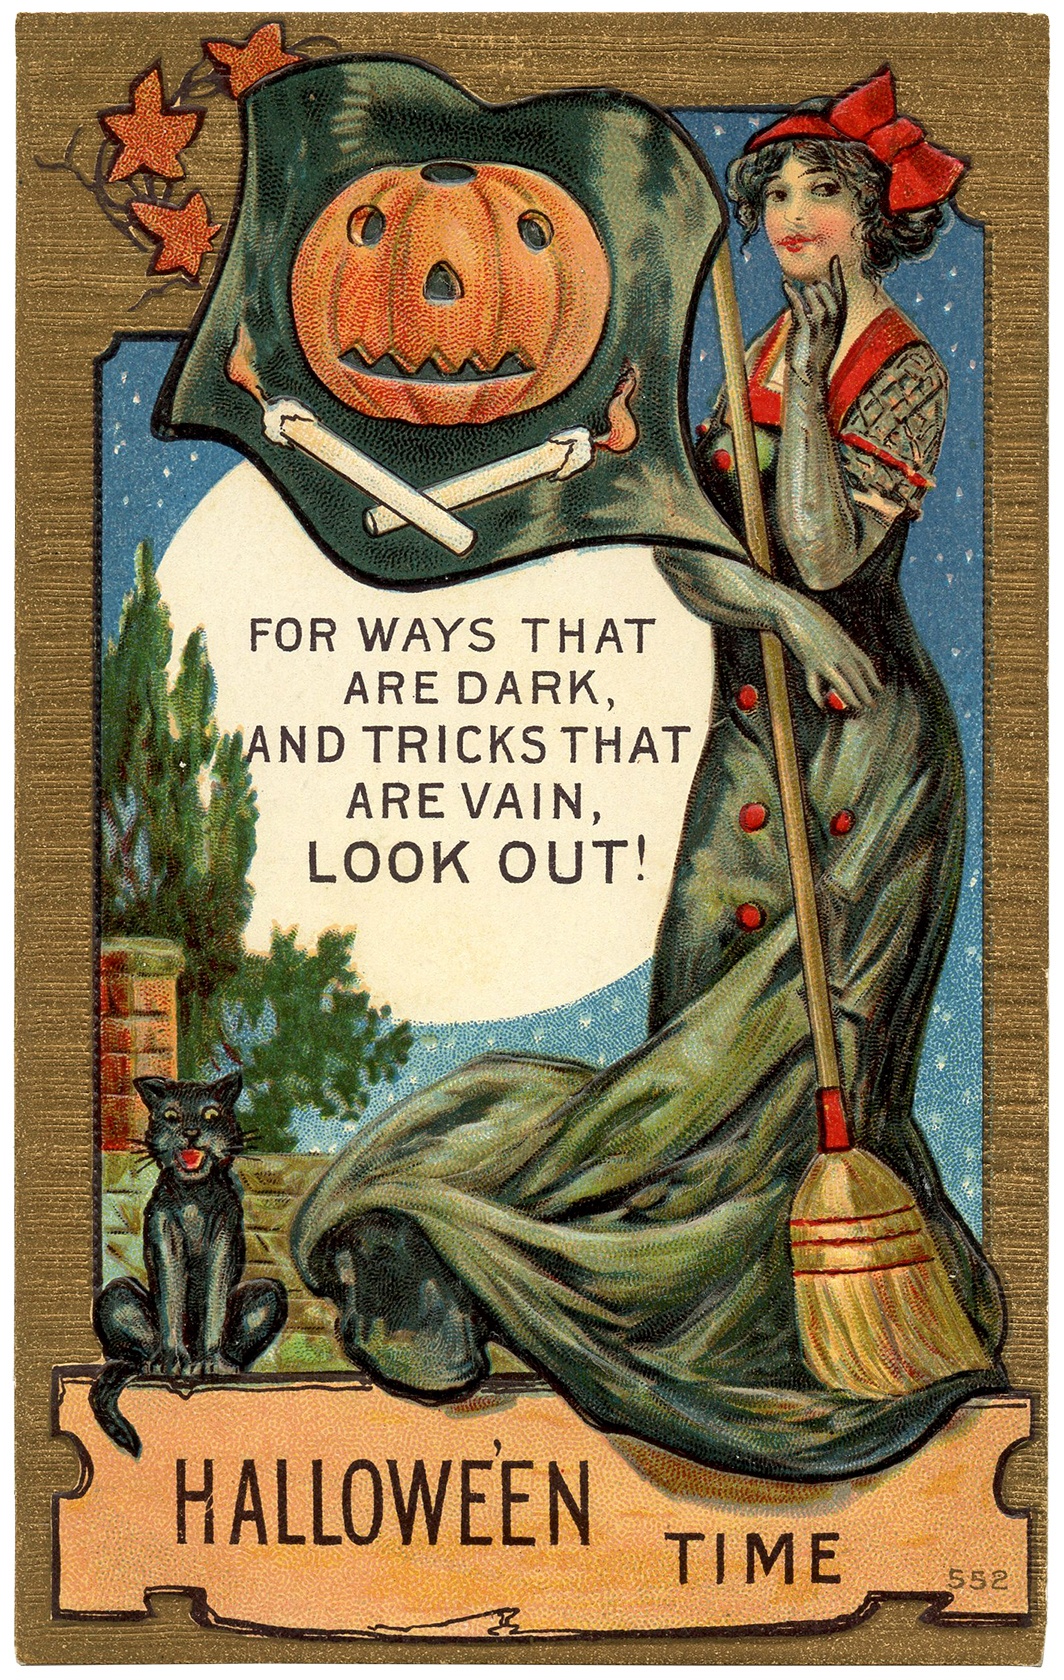 Vintage Halloween Postcard Image - The Graphics Fairy - Free Printable Vintage Halloween Images